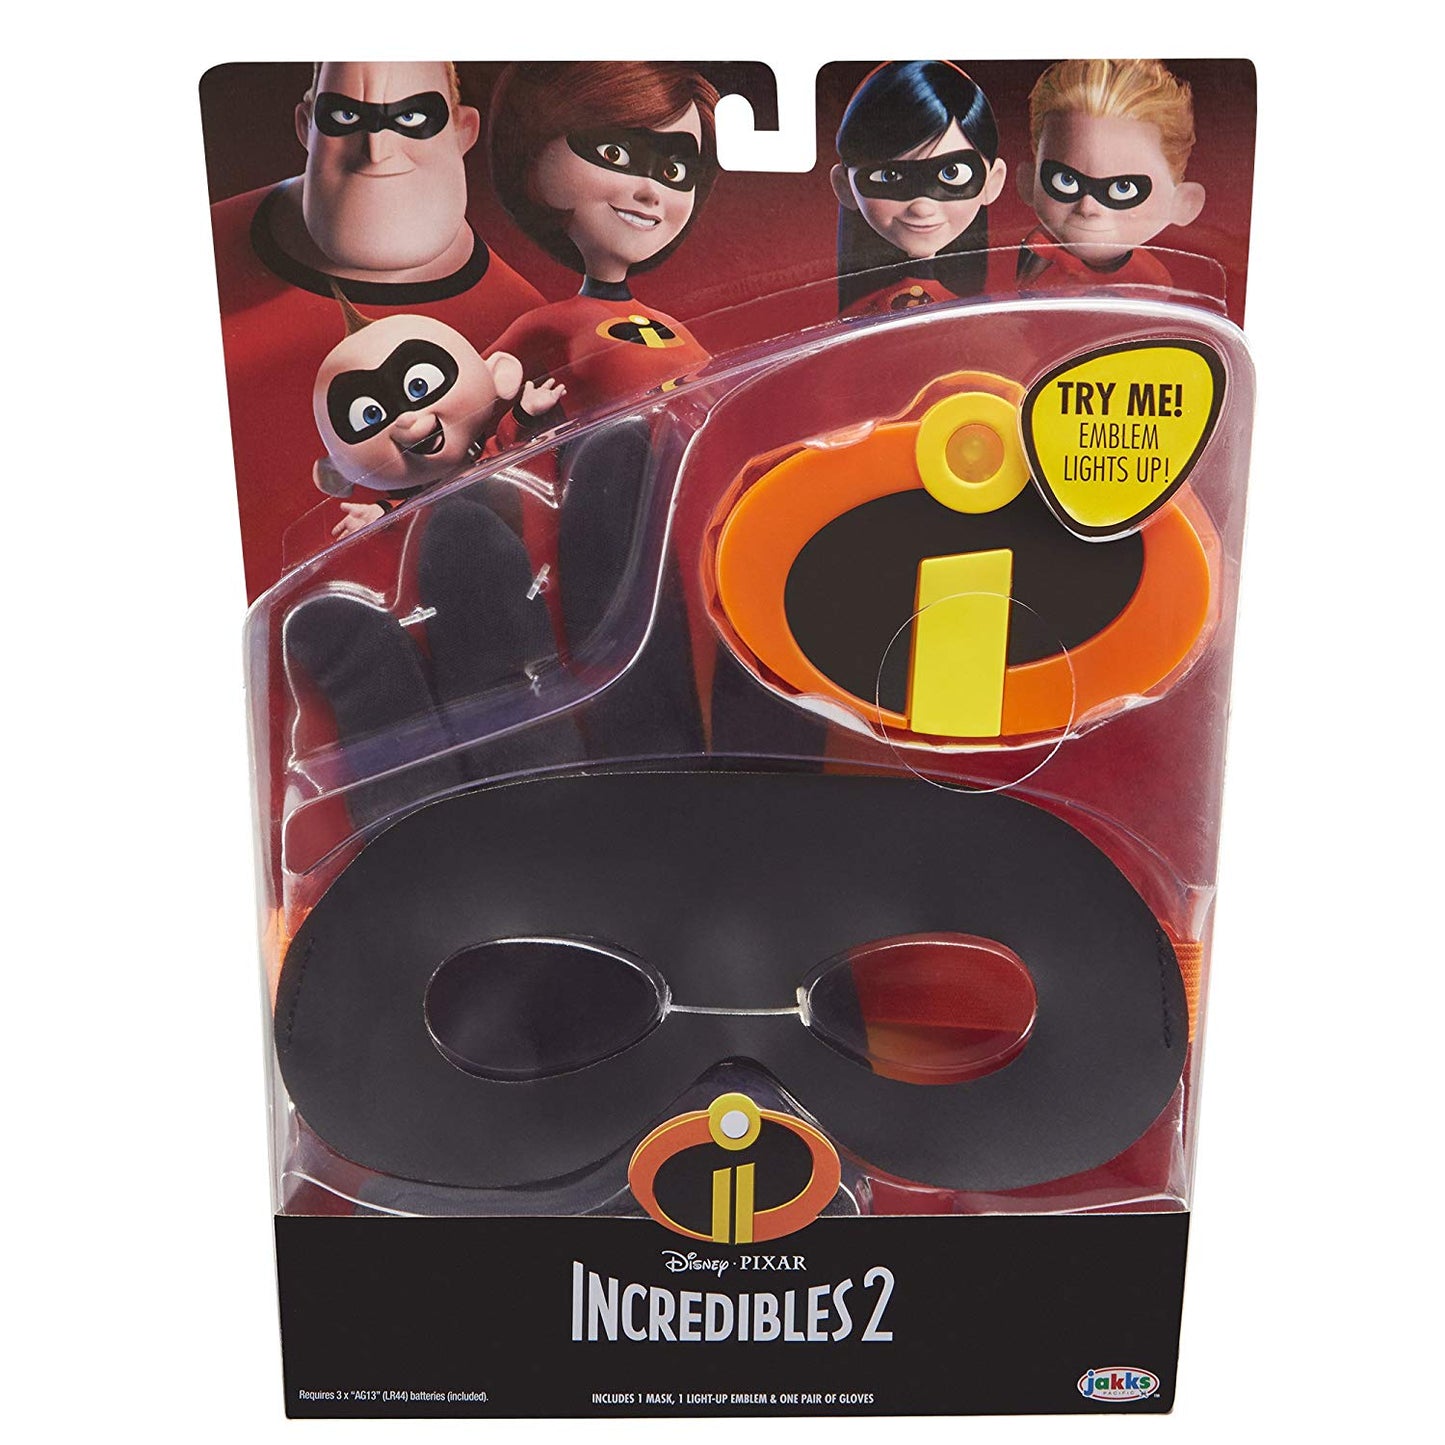 The Incredibles 2 Gear Set, 3-Piece (Mask/Gloves/Emblem)